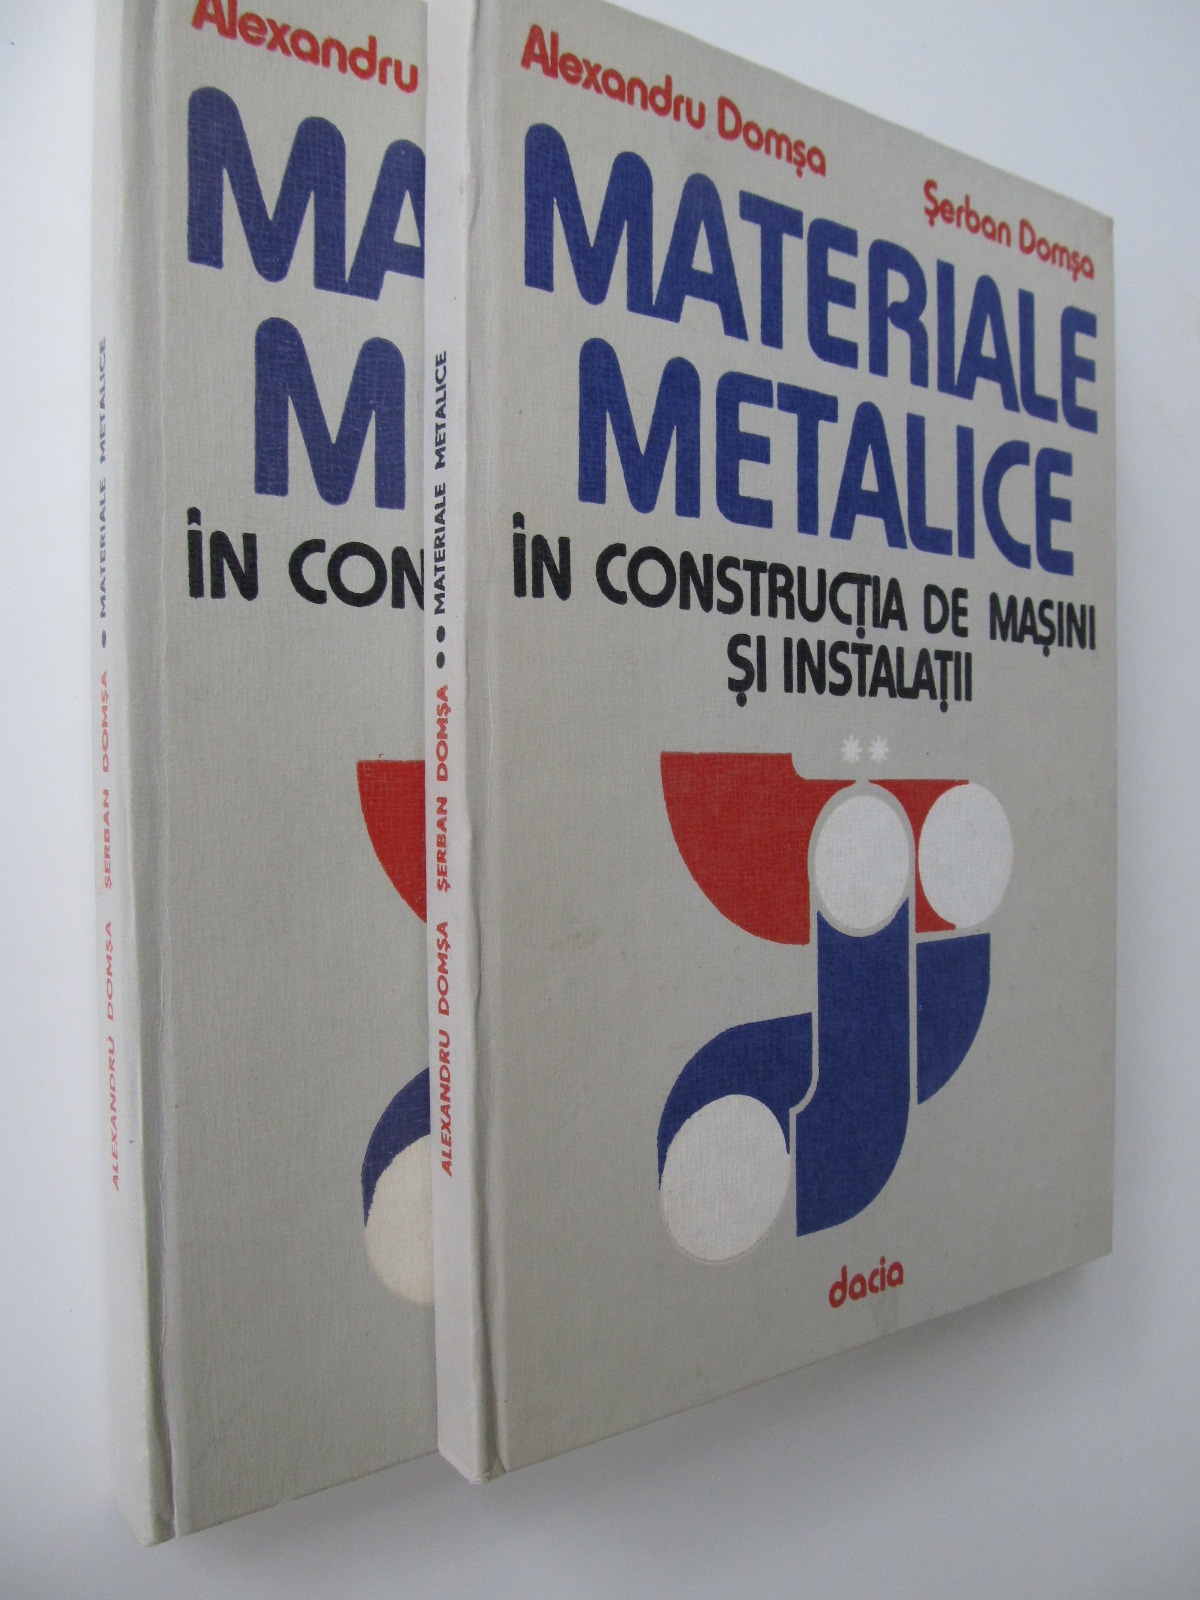 Carte Materiale metalice in constructia de masini si instalatii (2vol) - Alexandru Domsa , Serban Domsa